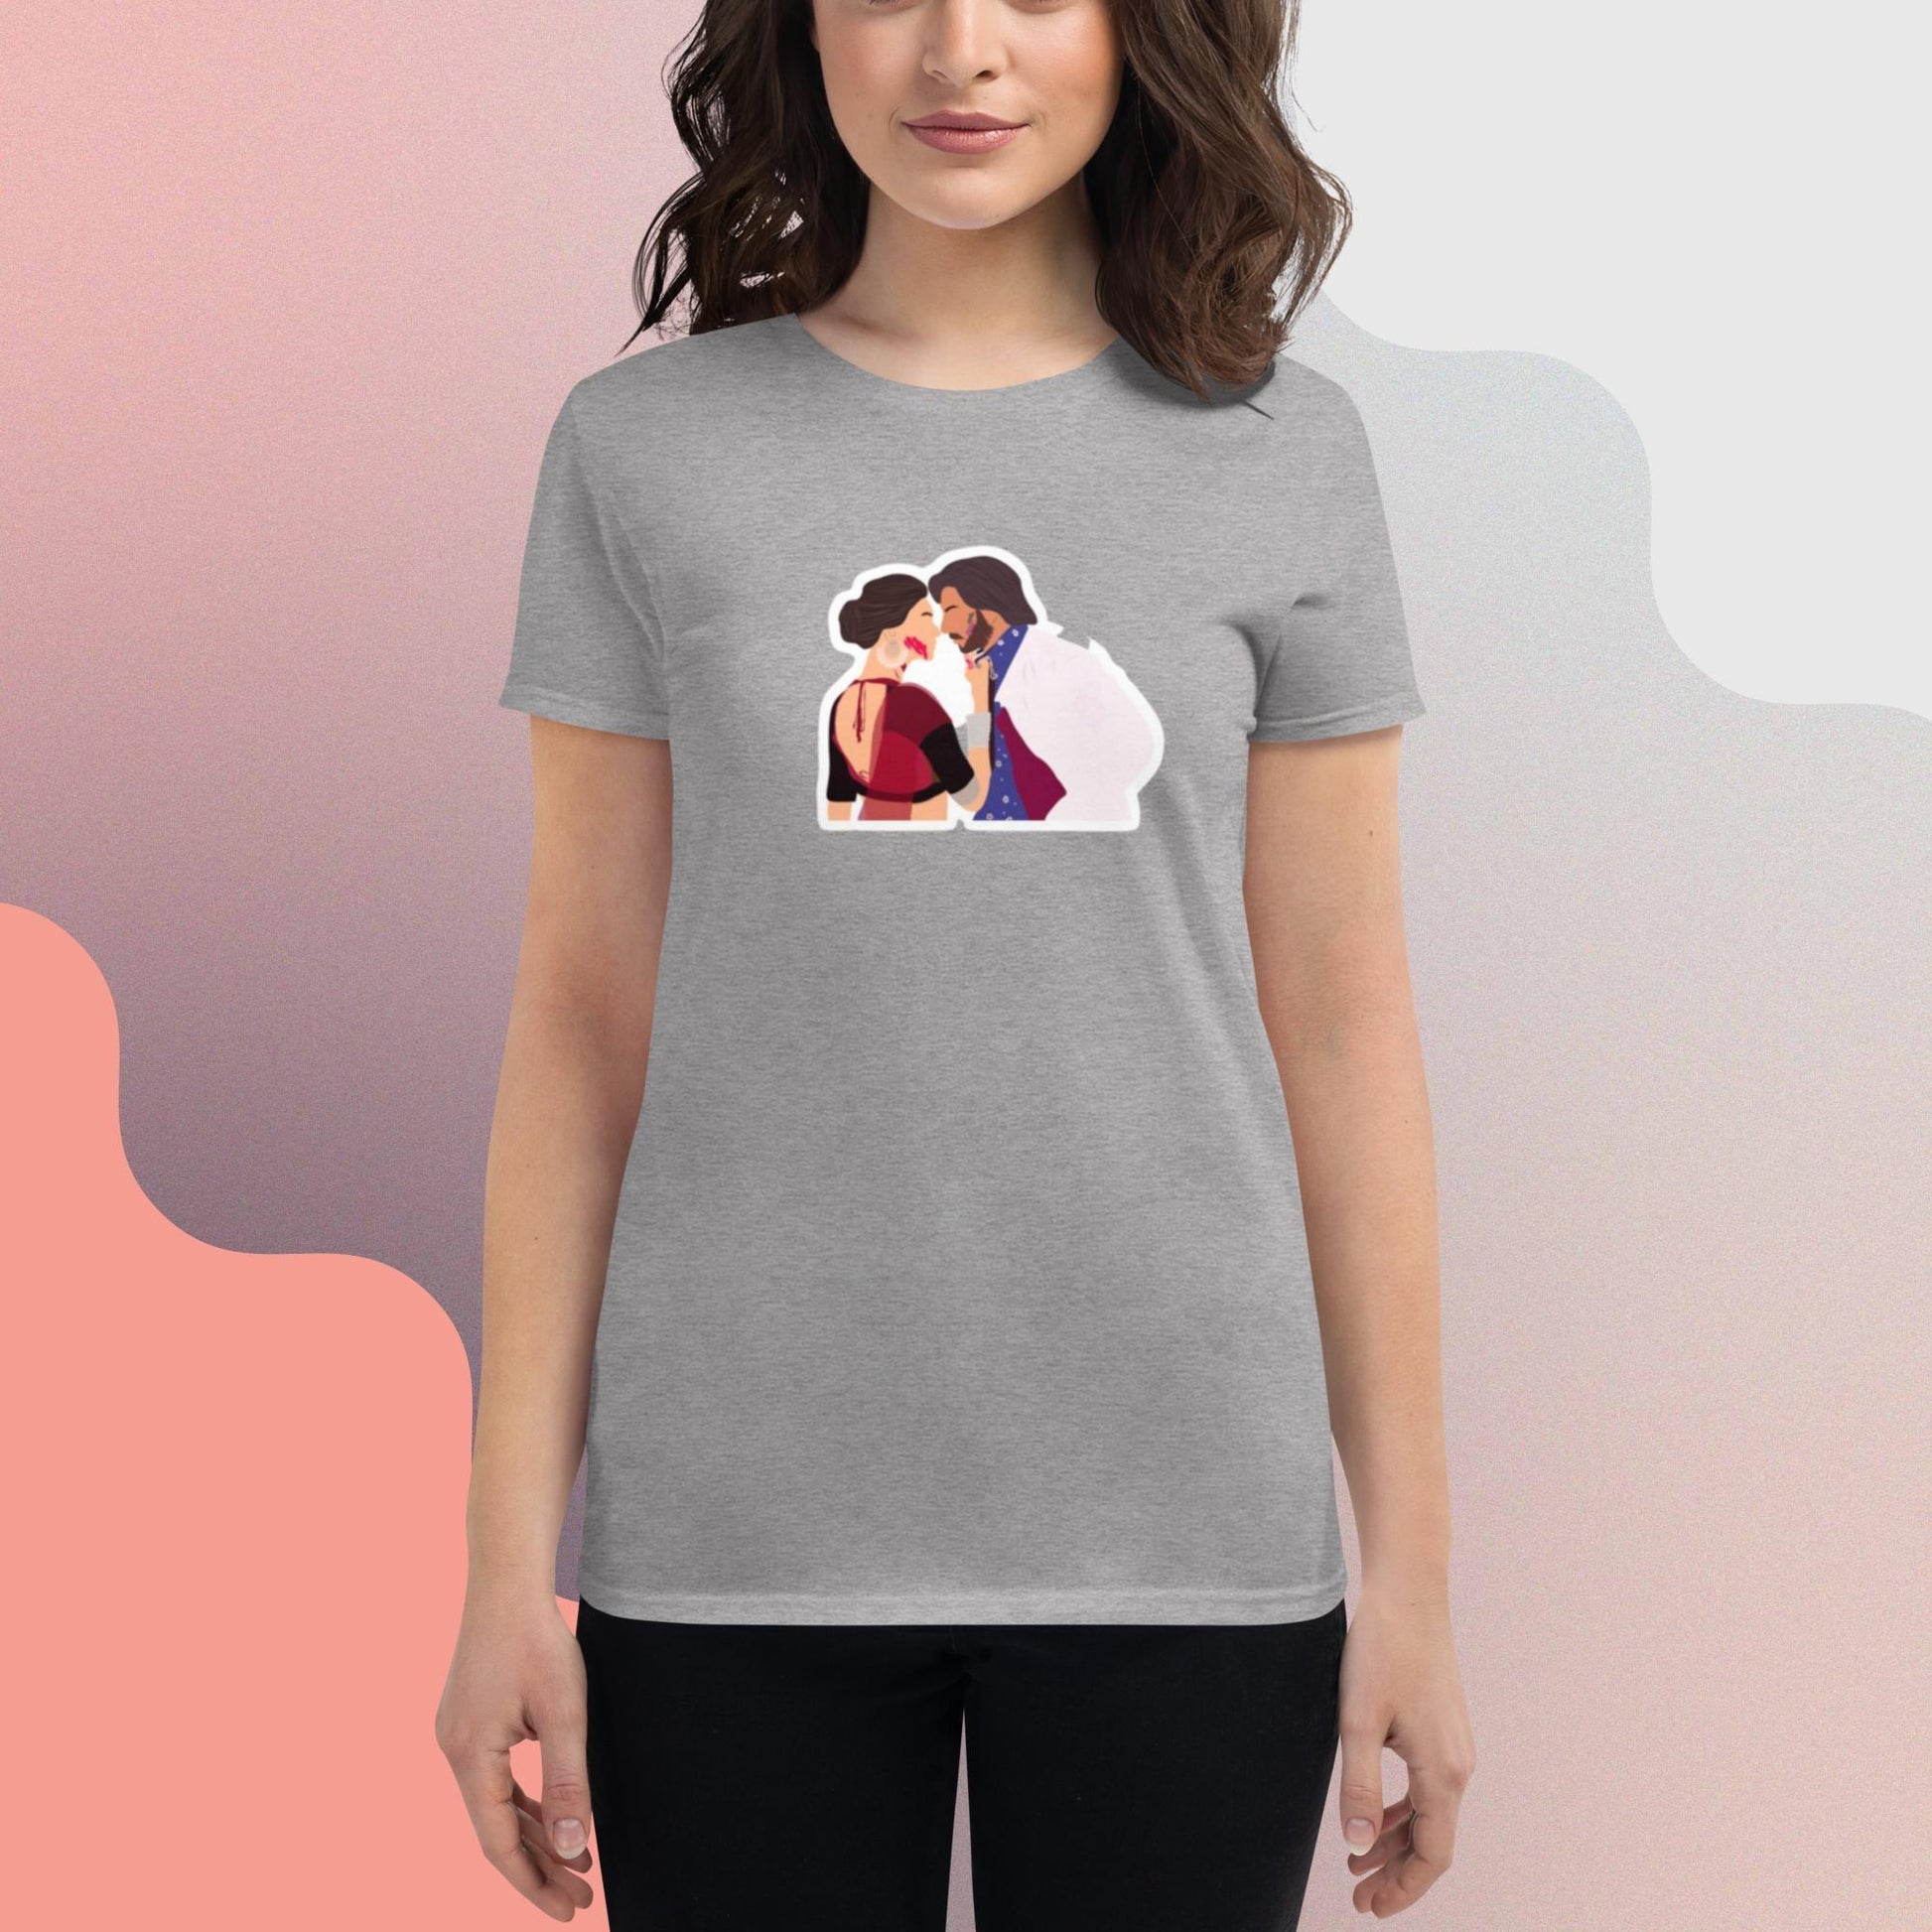 Bollywood Ram Leela Women's short sleeve t-shirt graphic tshirt - The Bolly Matrix